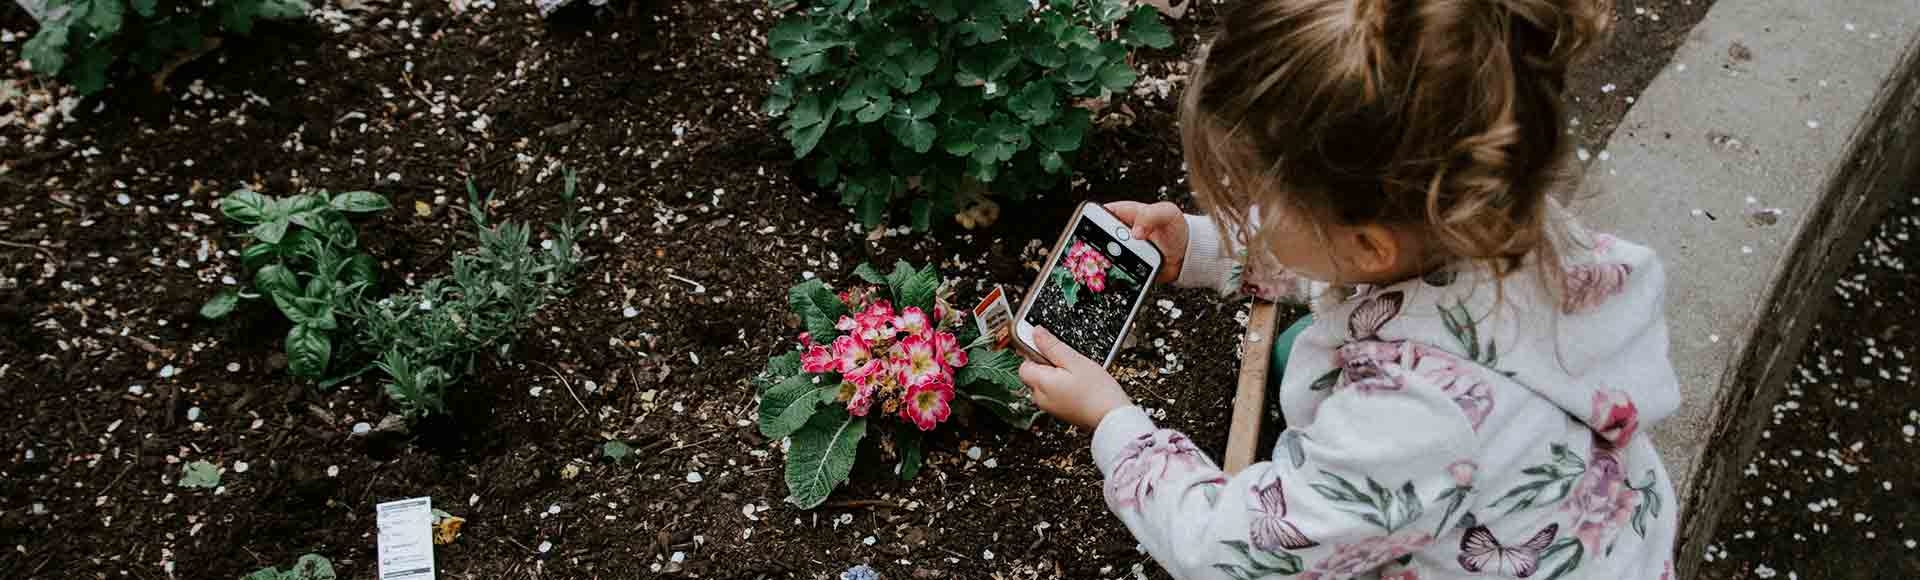 3 Interesting Benefits of Gardening With Your Children